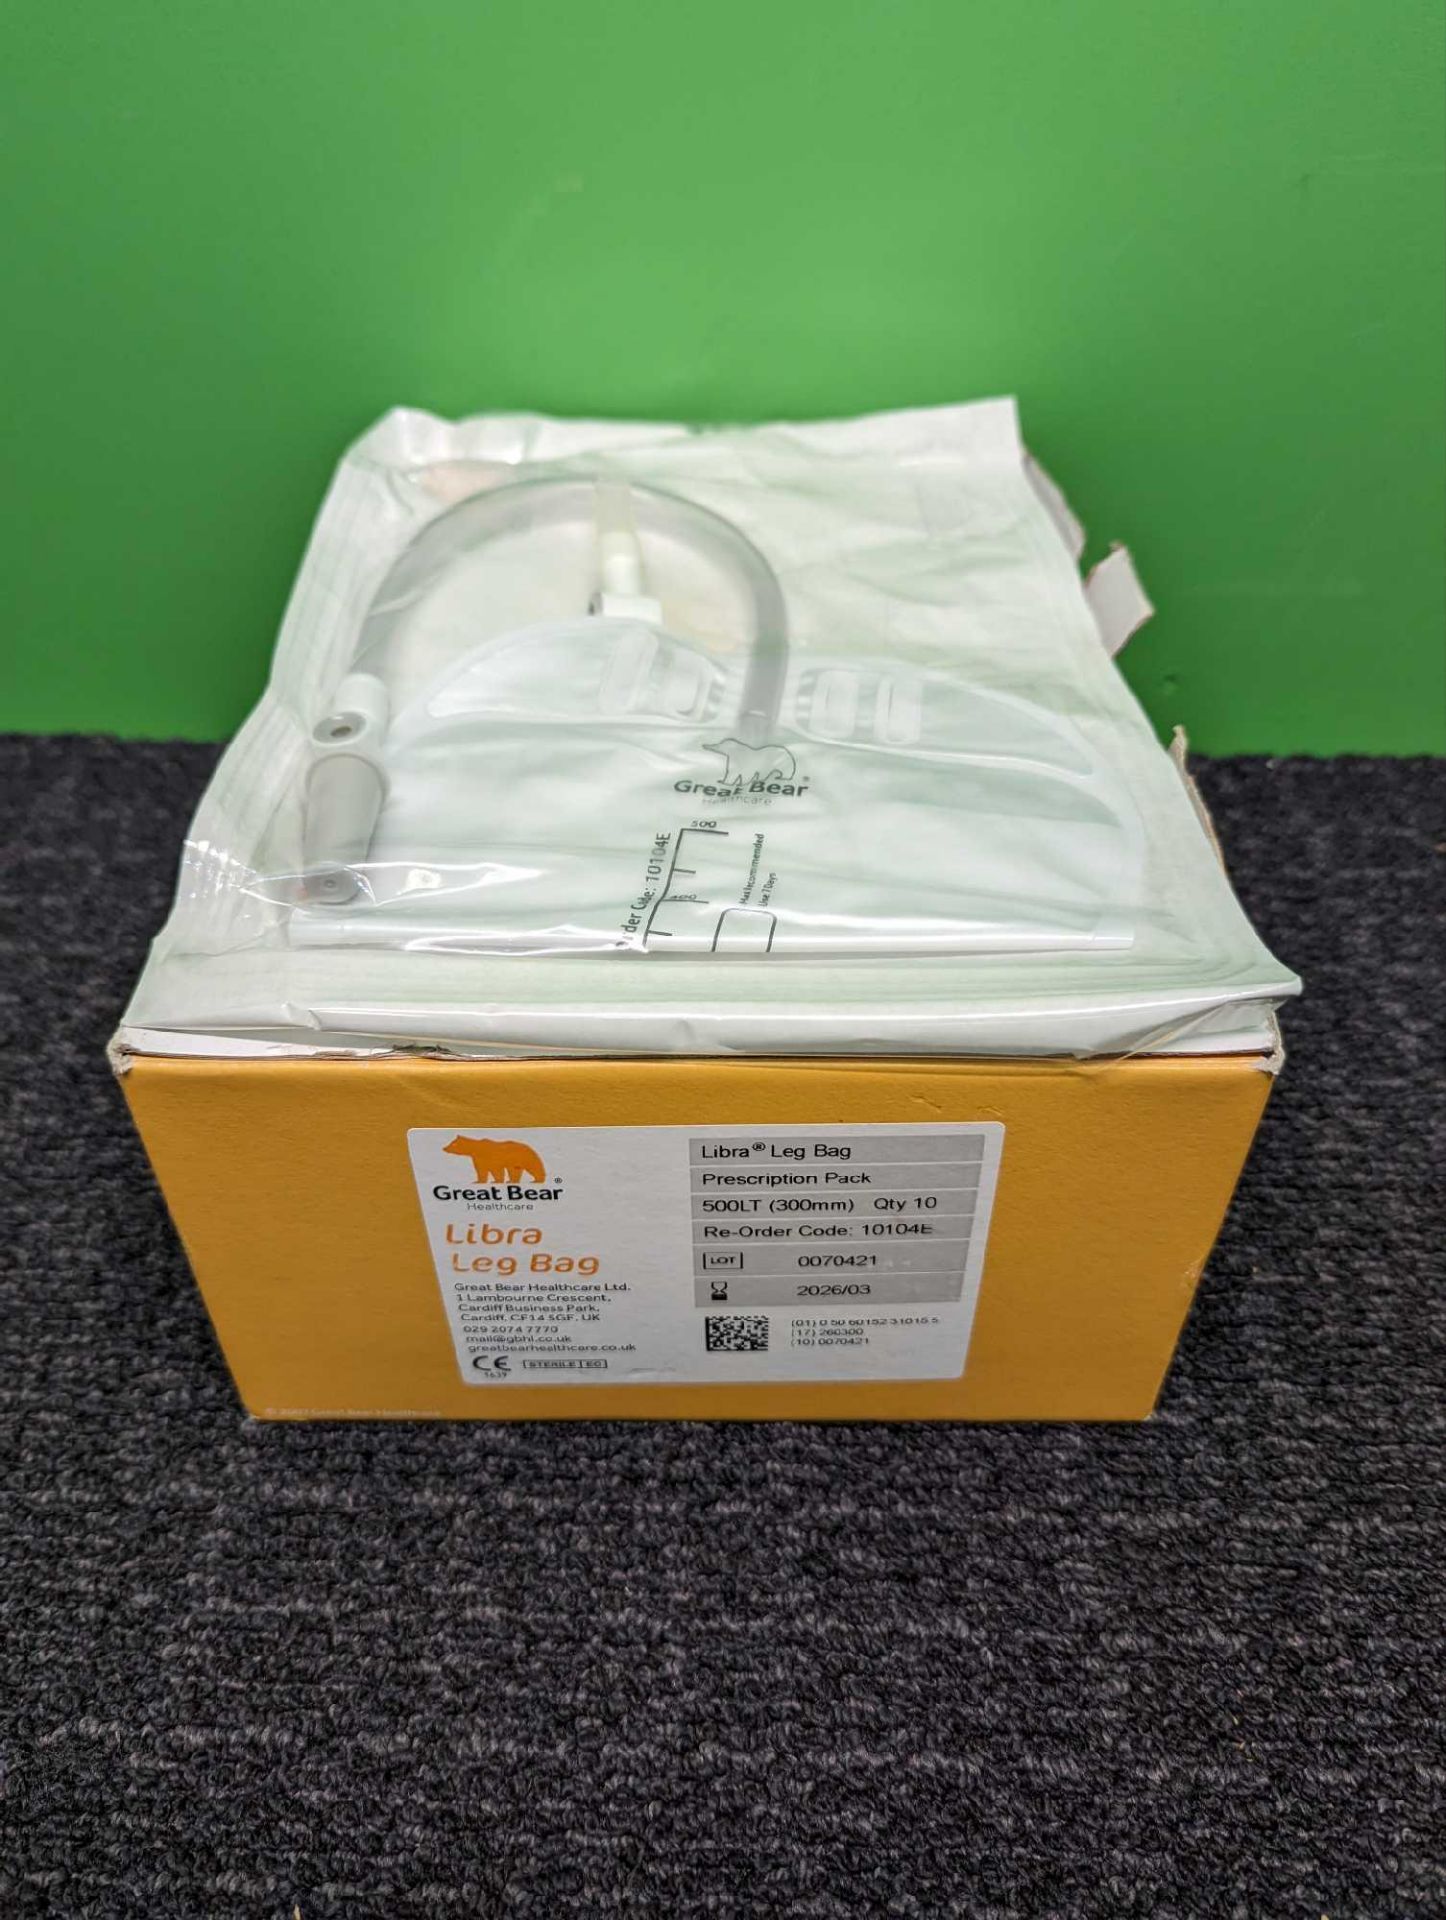 Box of Great Bear Healthcare Libra Leg Bag Prescription Packs (500LT)